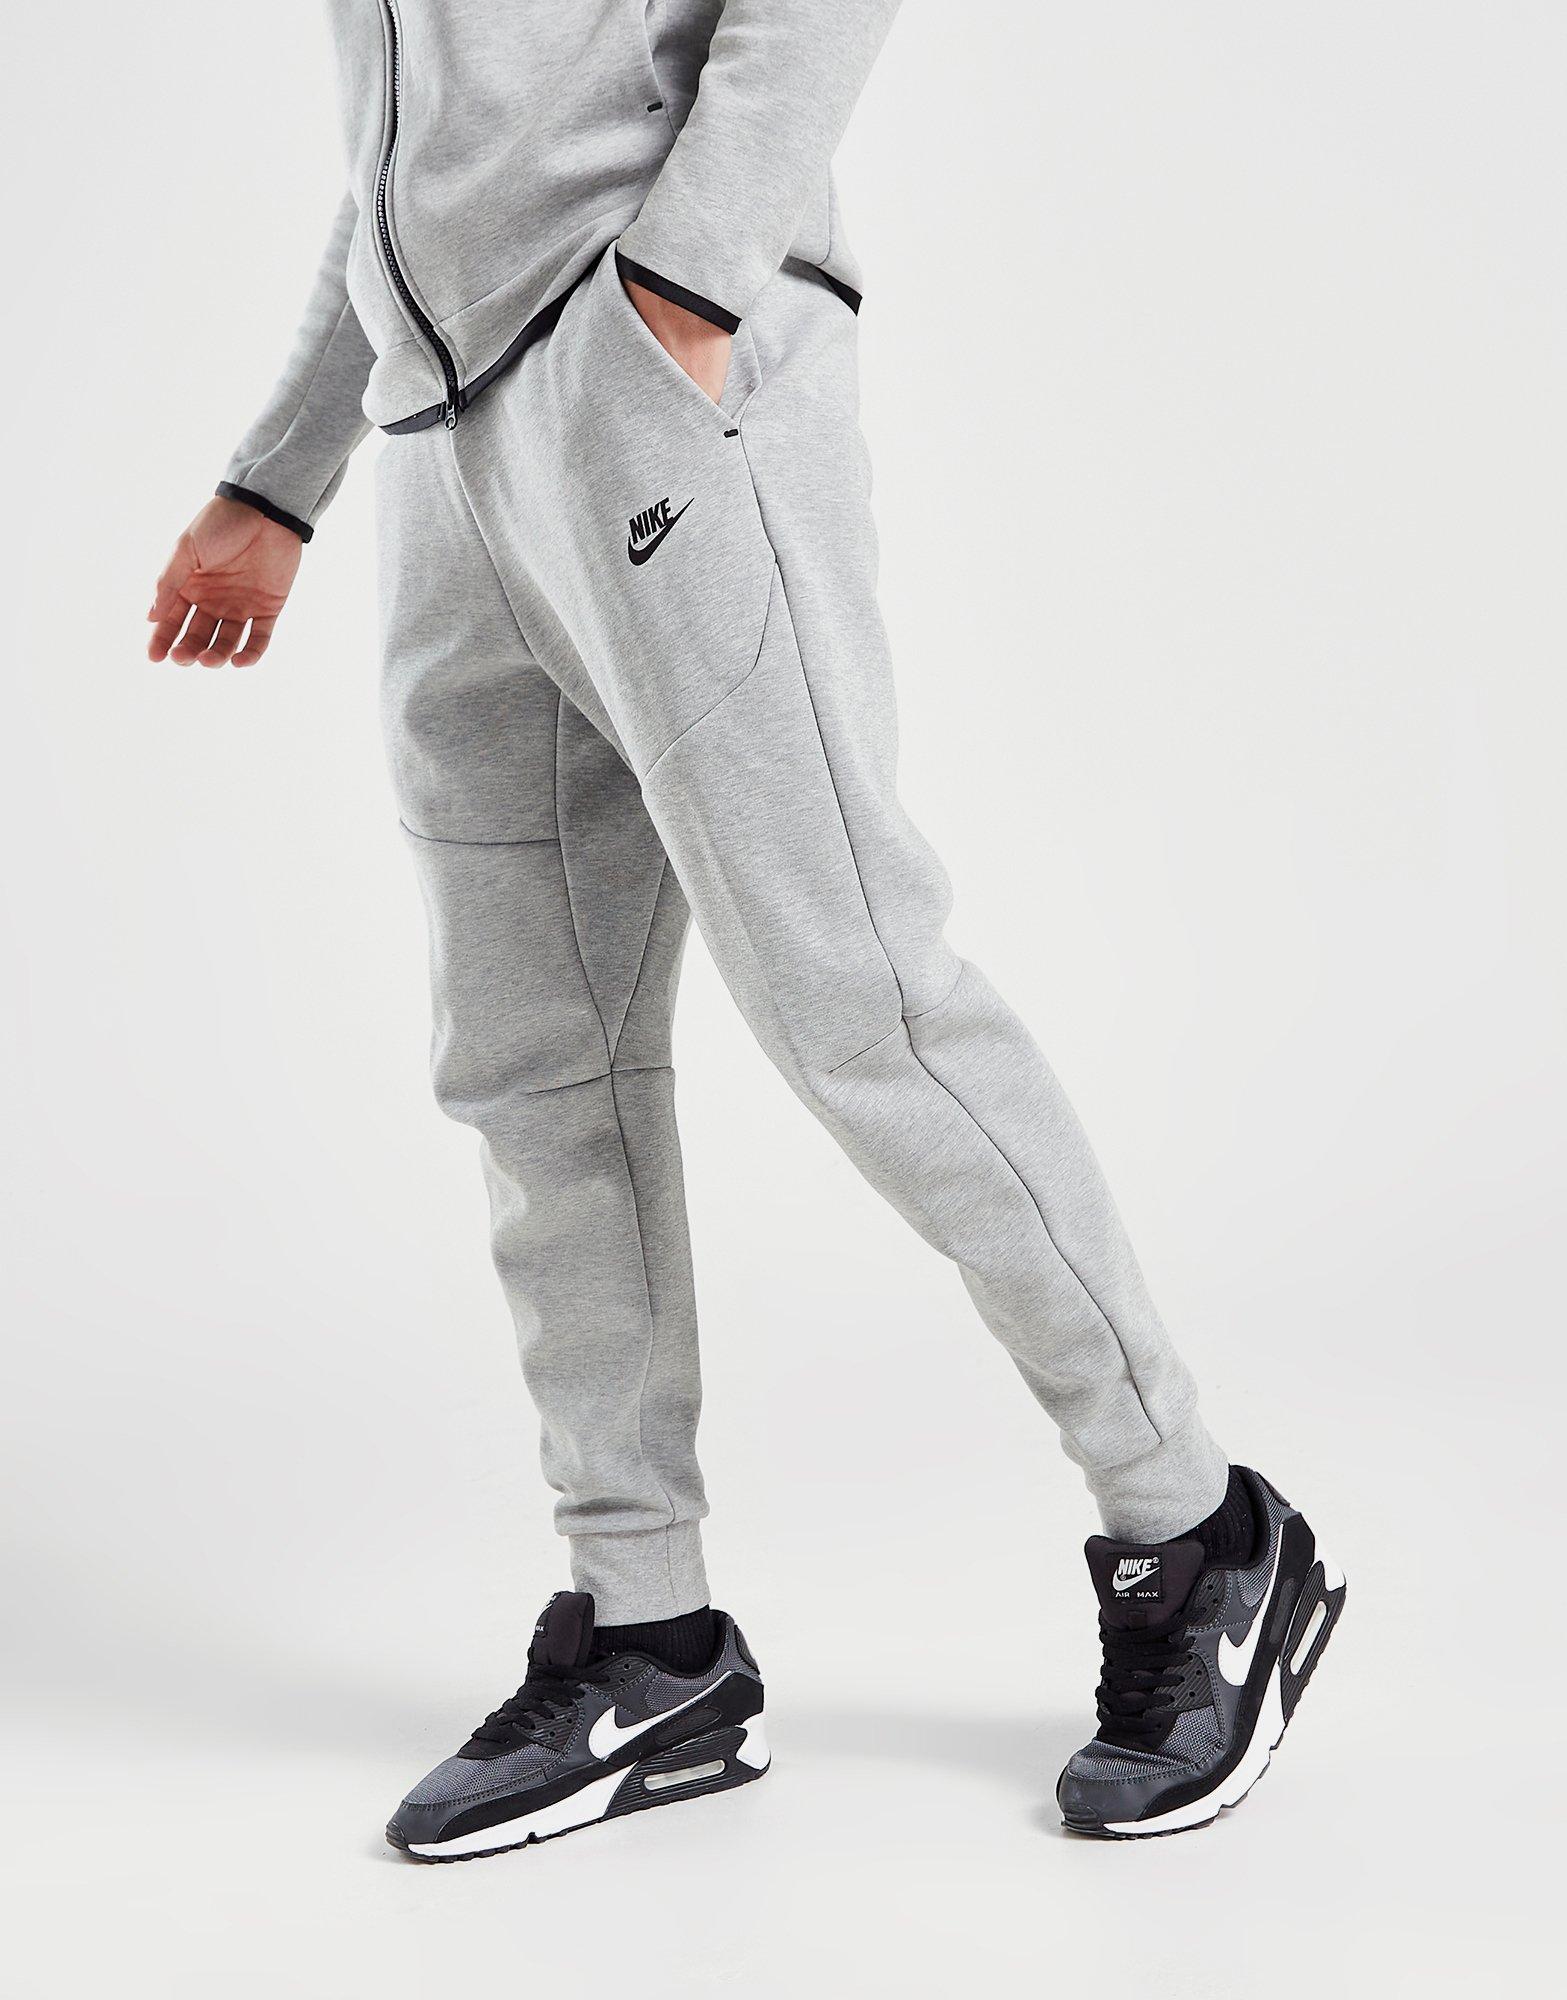 nike tech fleece jogger in grey